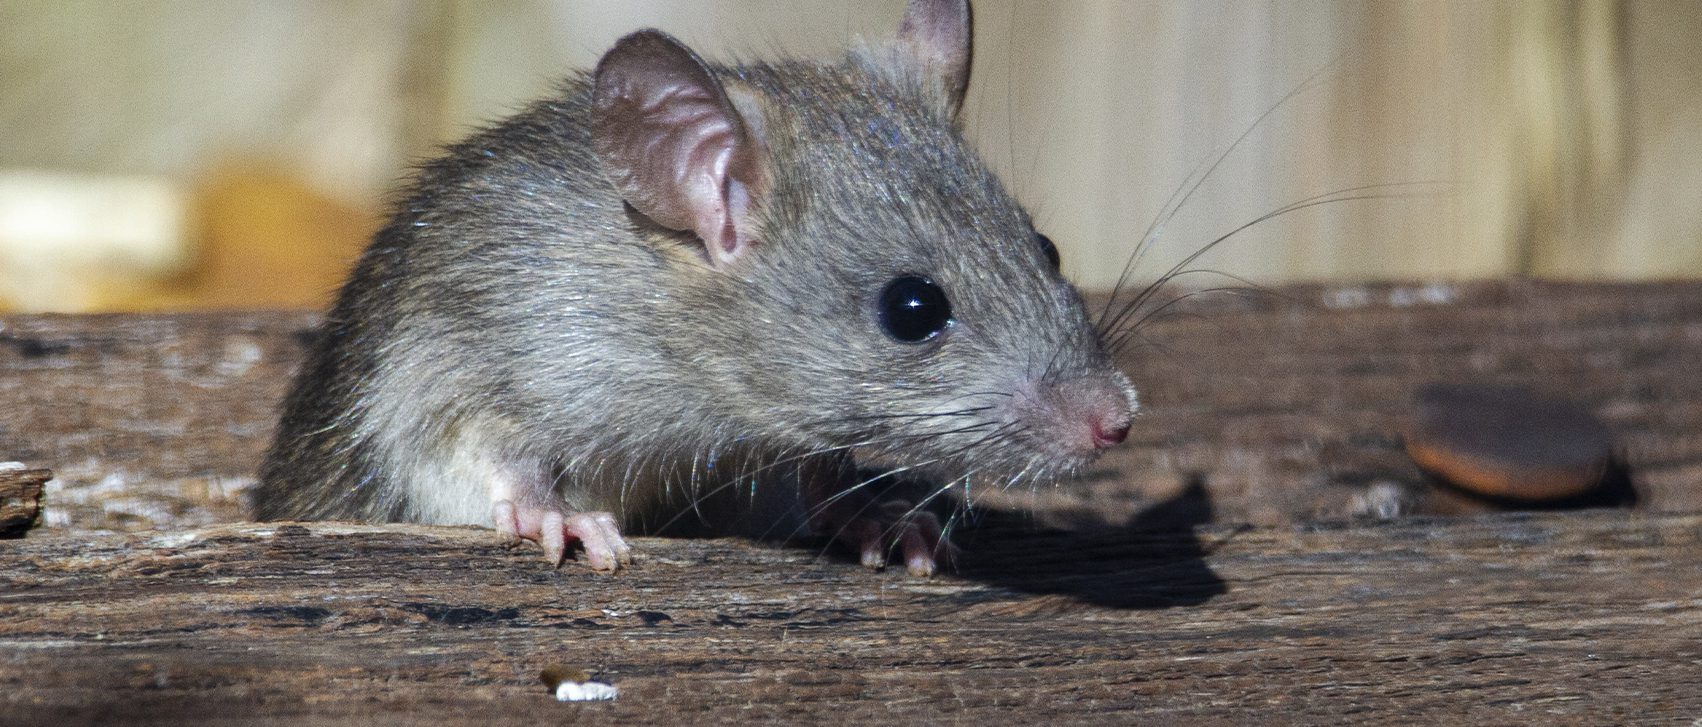 Rotte - Undgå rotter i bolig